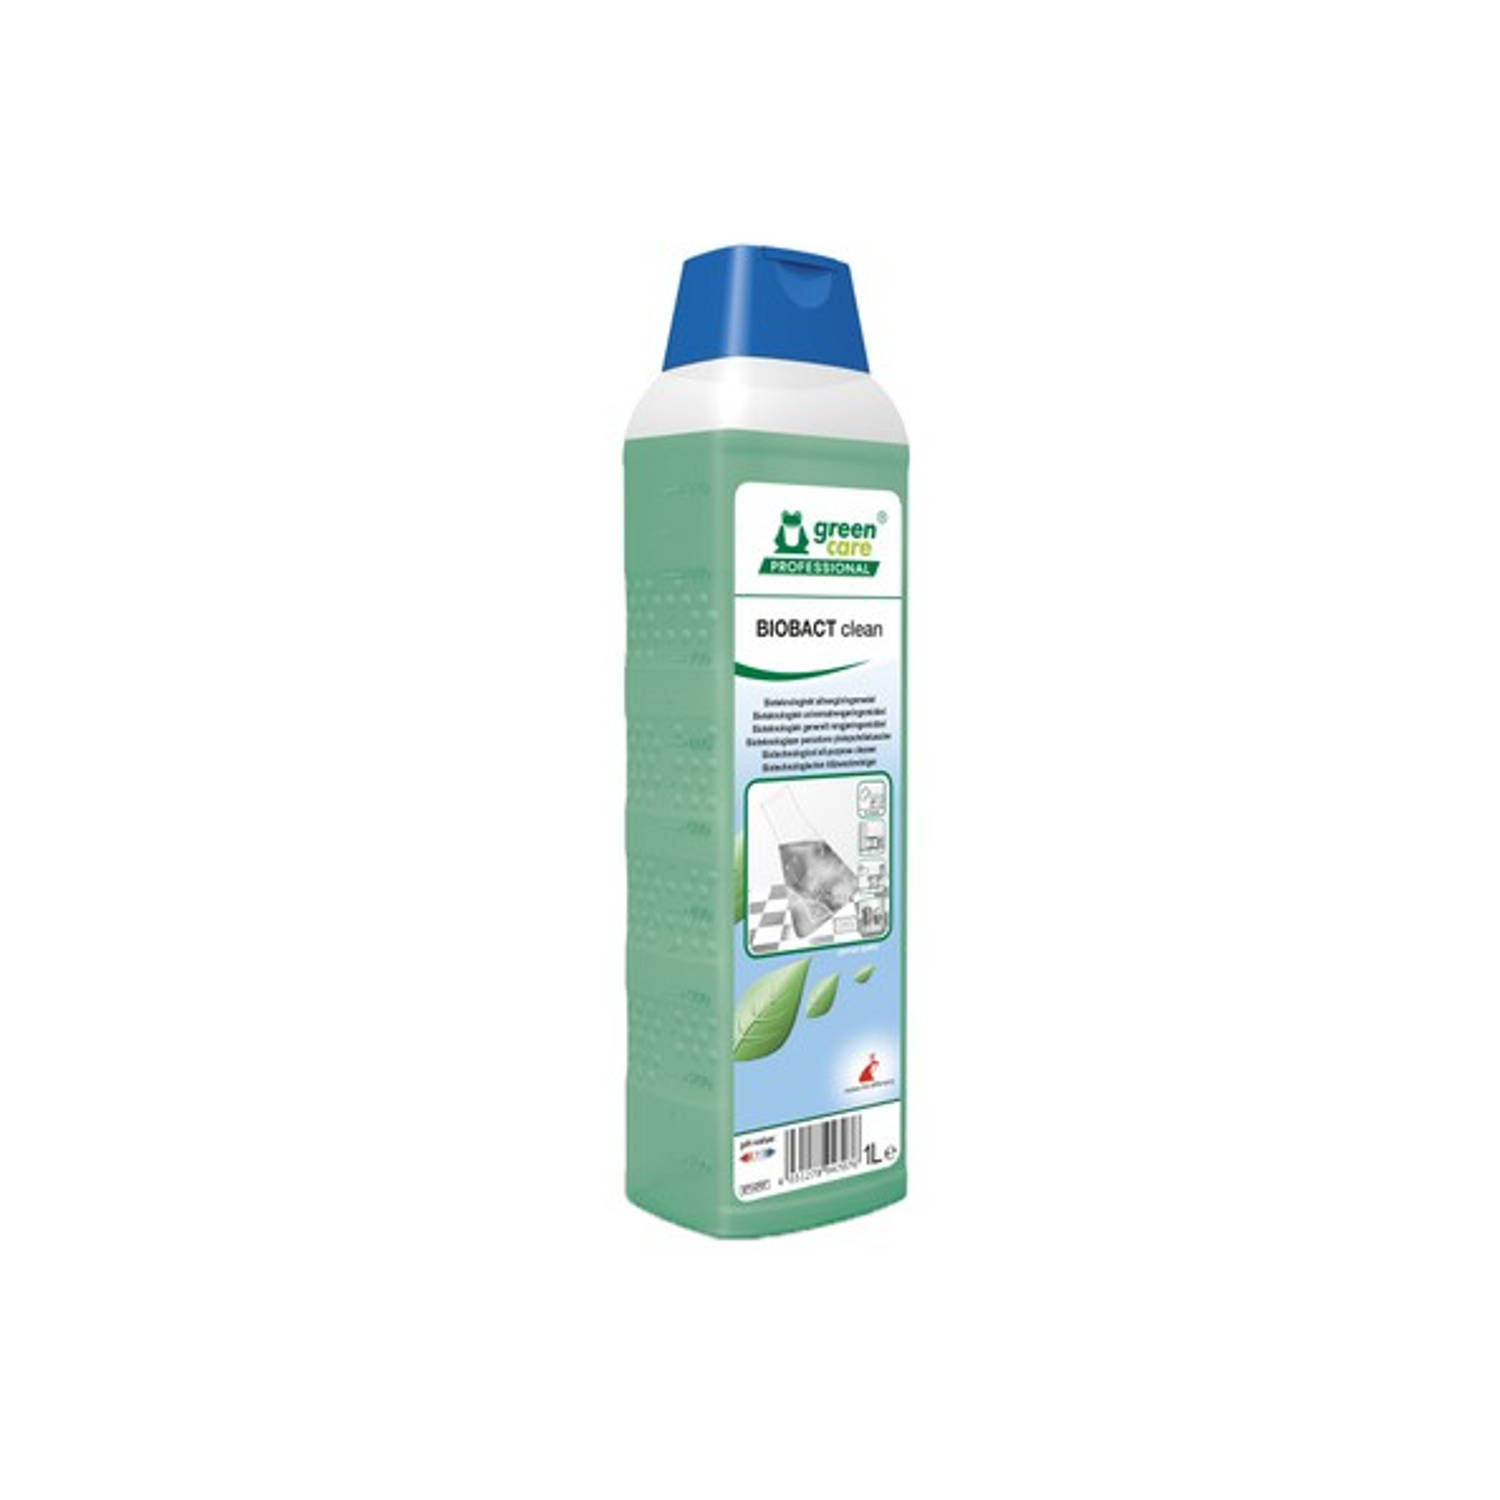 Green care professional biobact clean (1 liter)